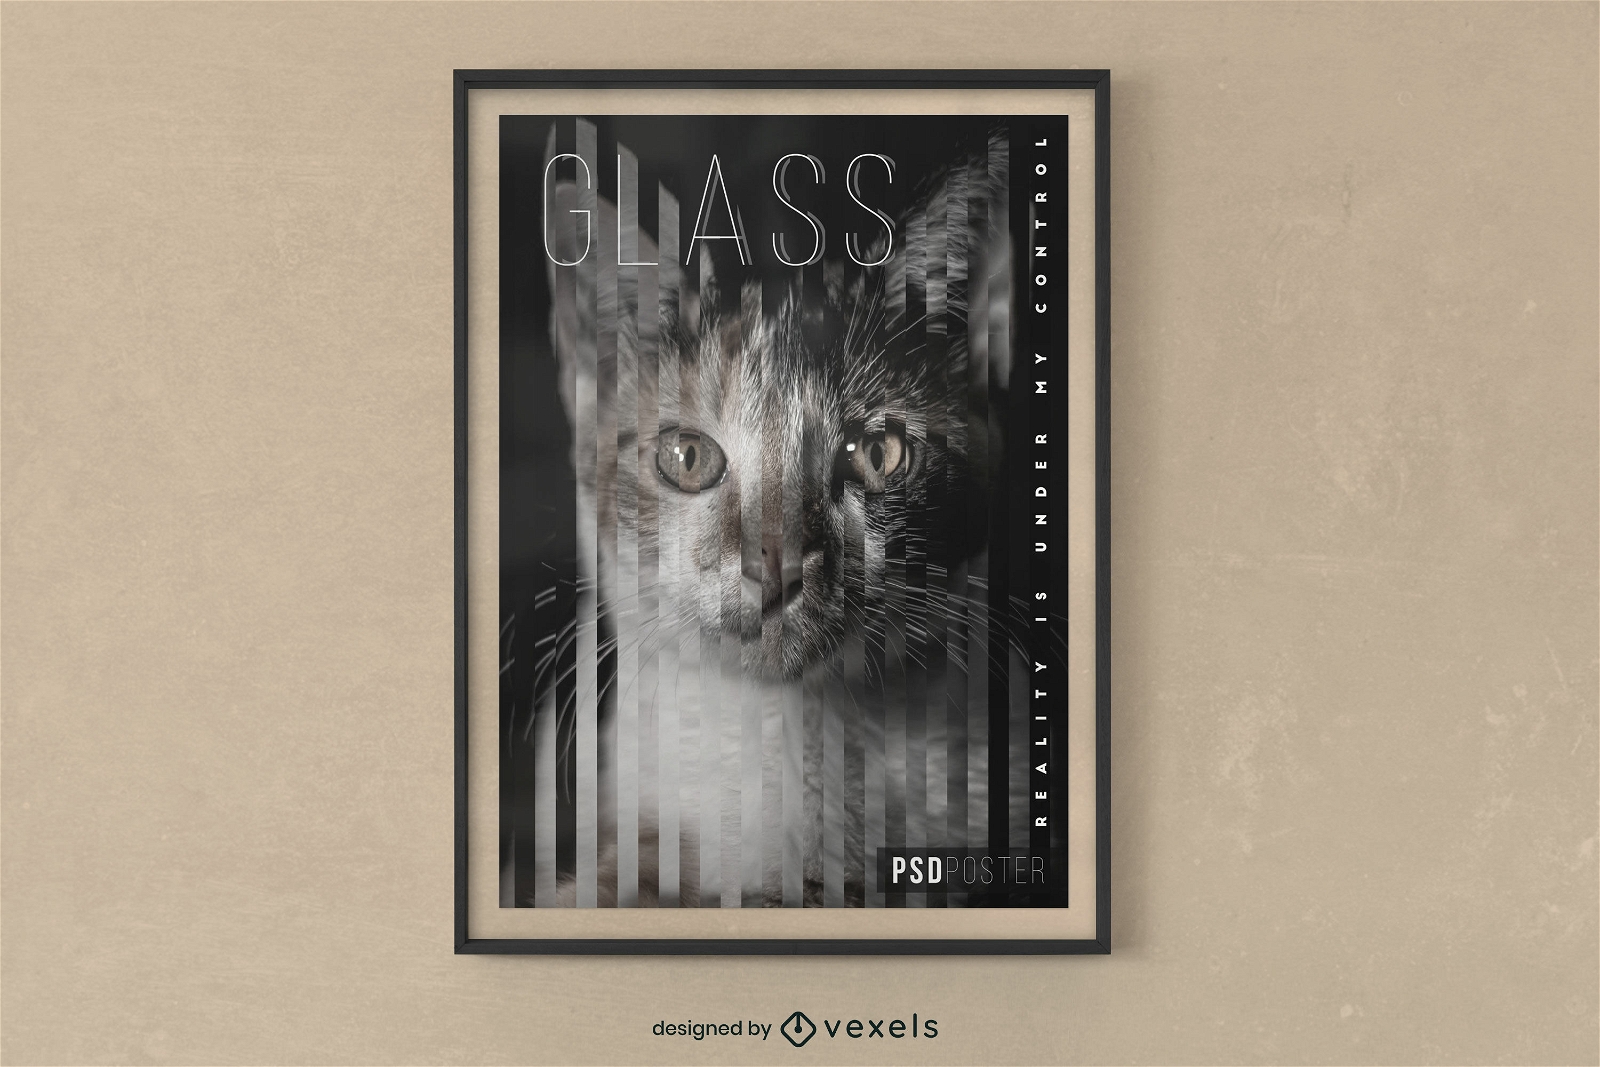 Gato animal detrás de un cartel de psd fotográfico de vidrio.